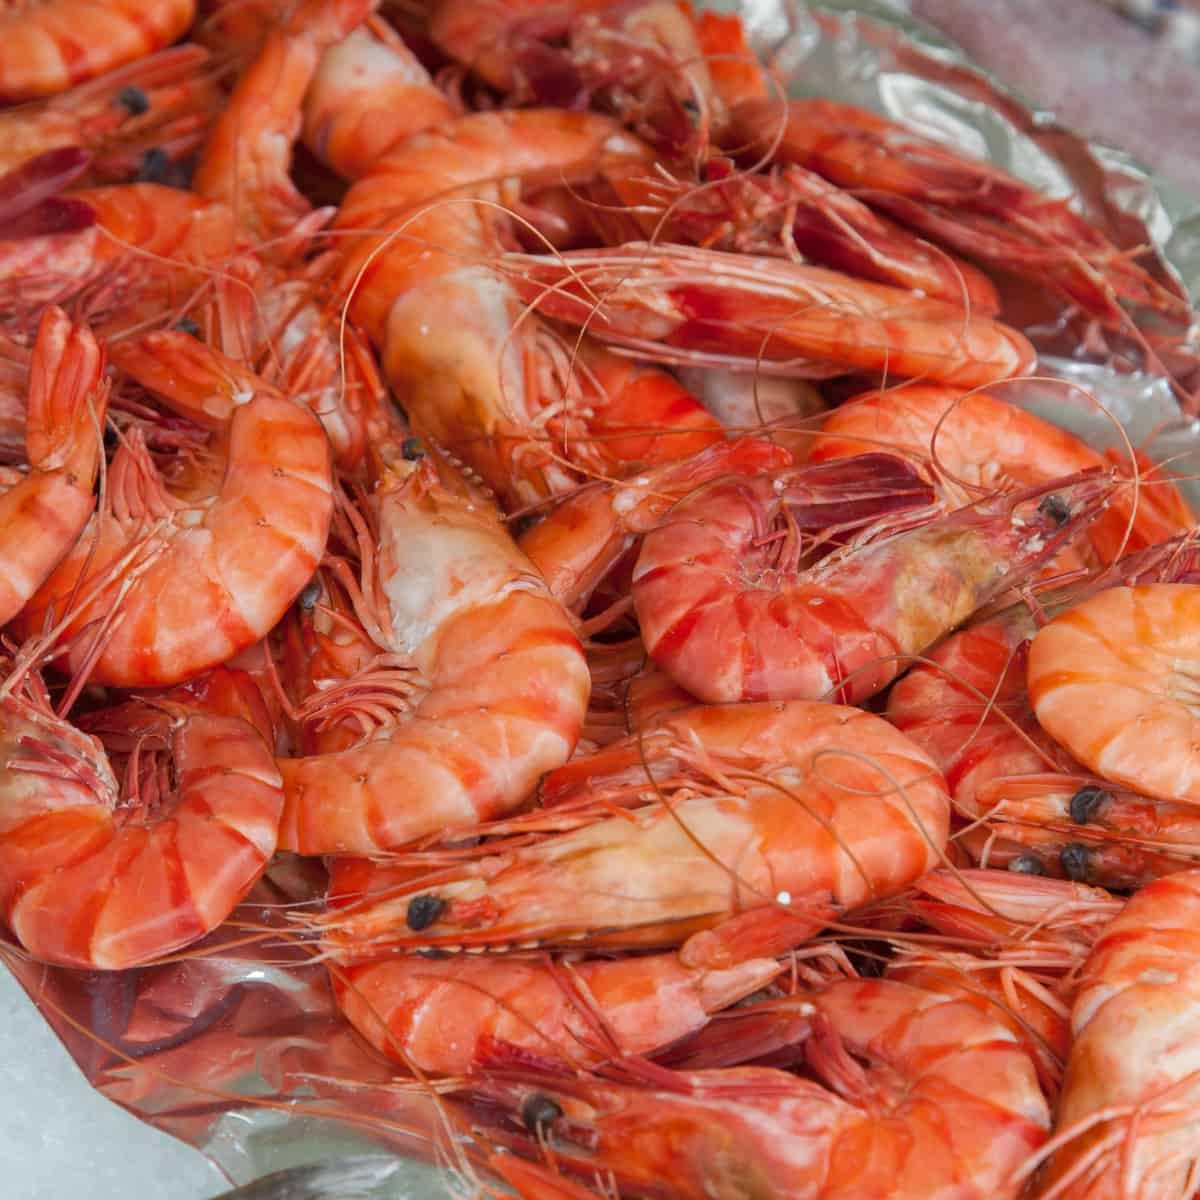 What are shrimp